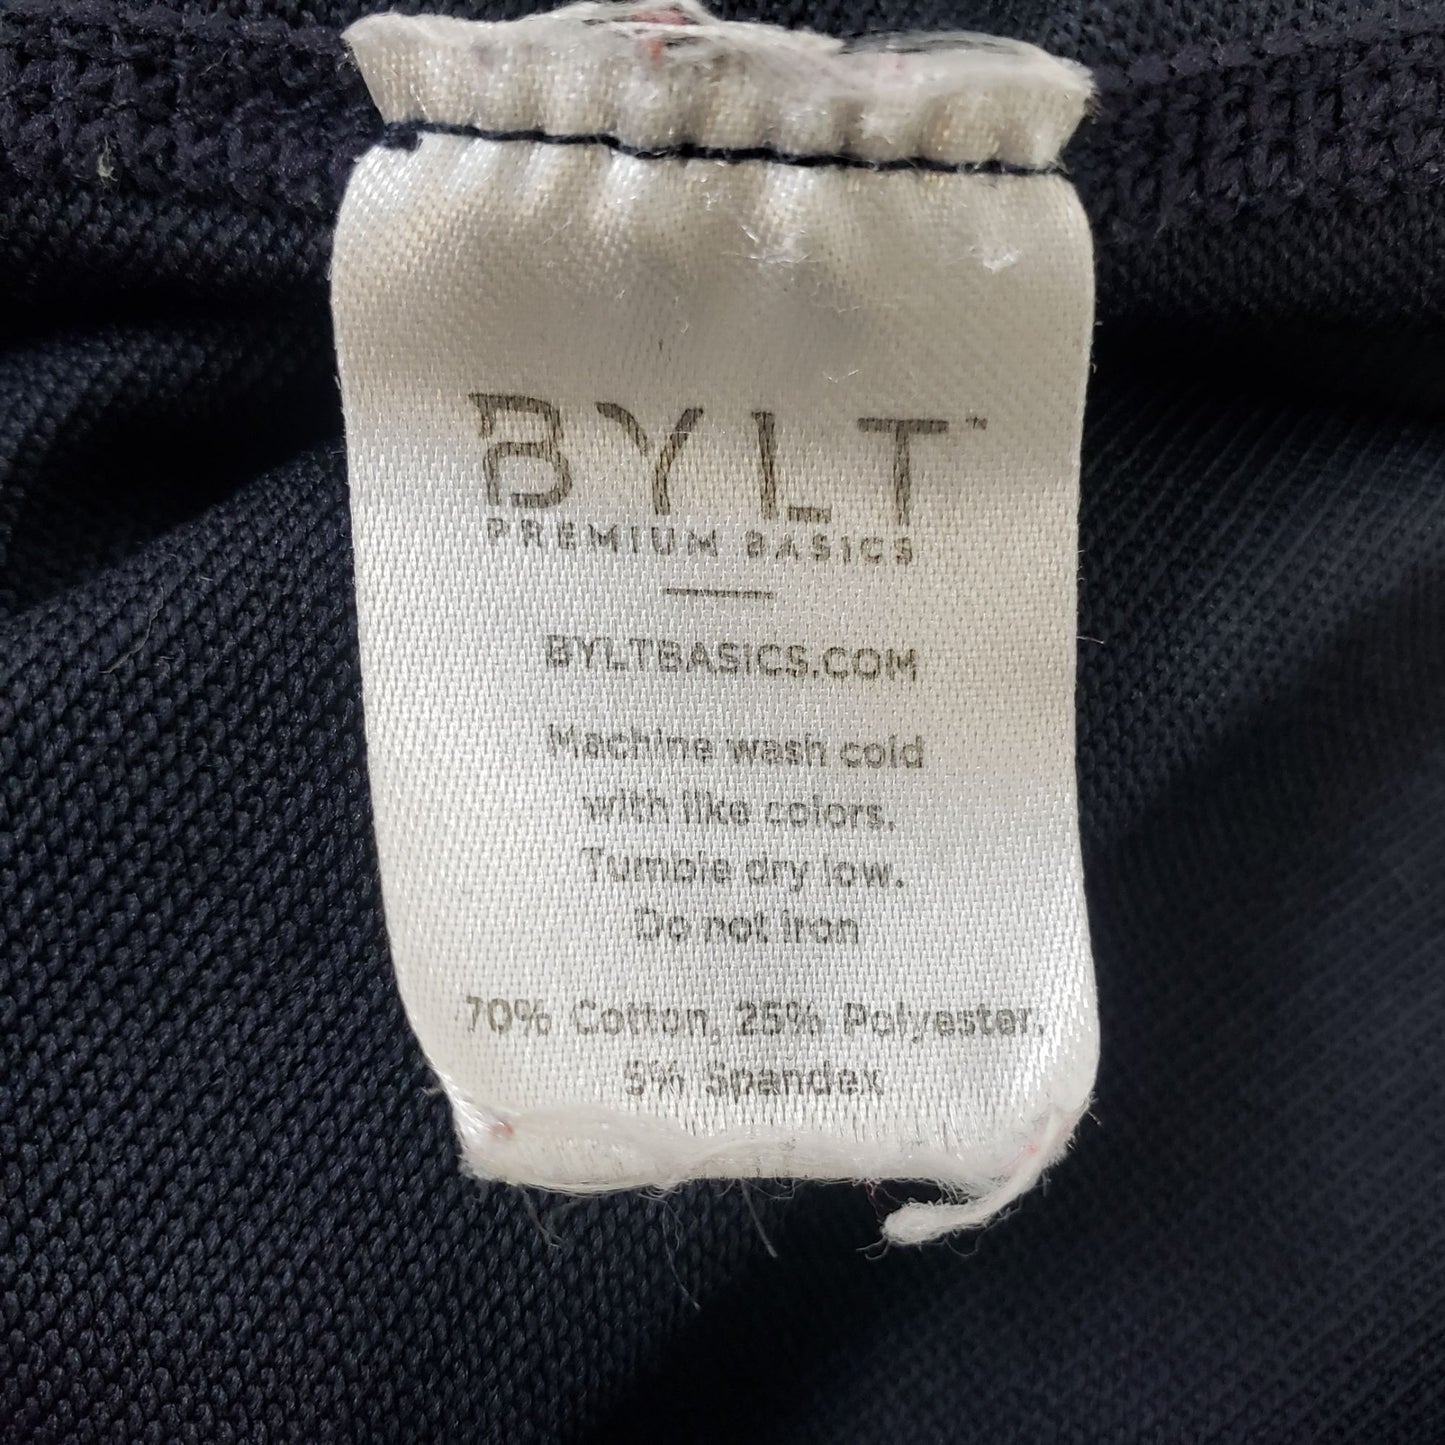 BYLT Drop Cut Lux Short Sleeve Activewear T-Shirt Size Medium